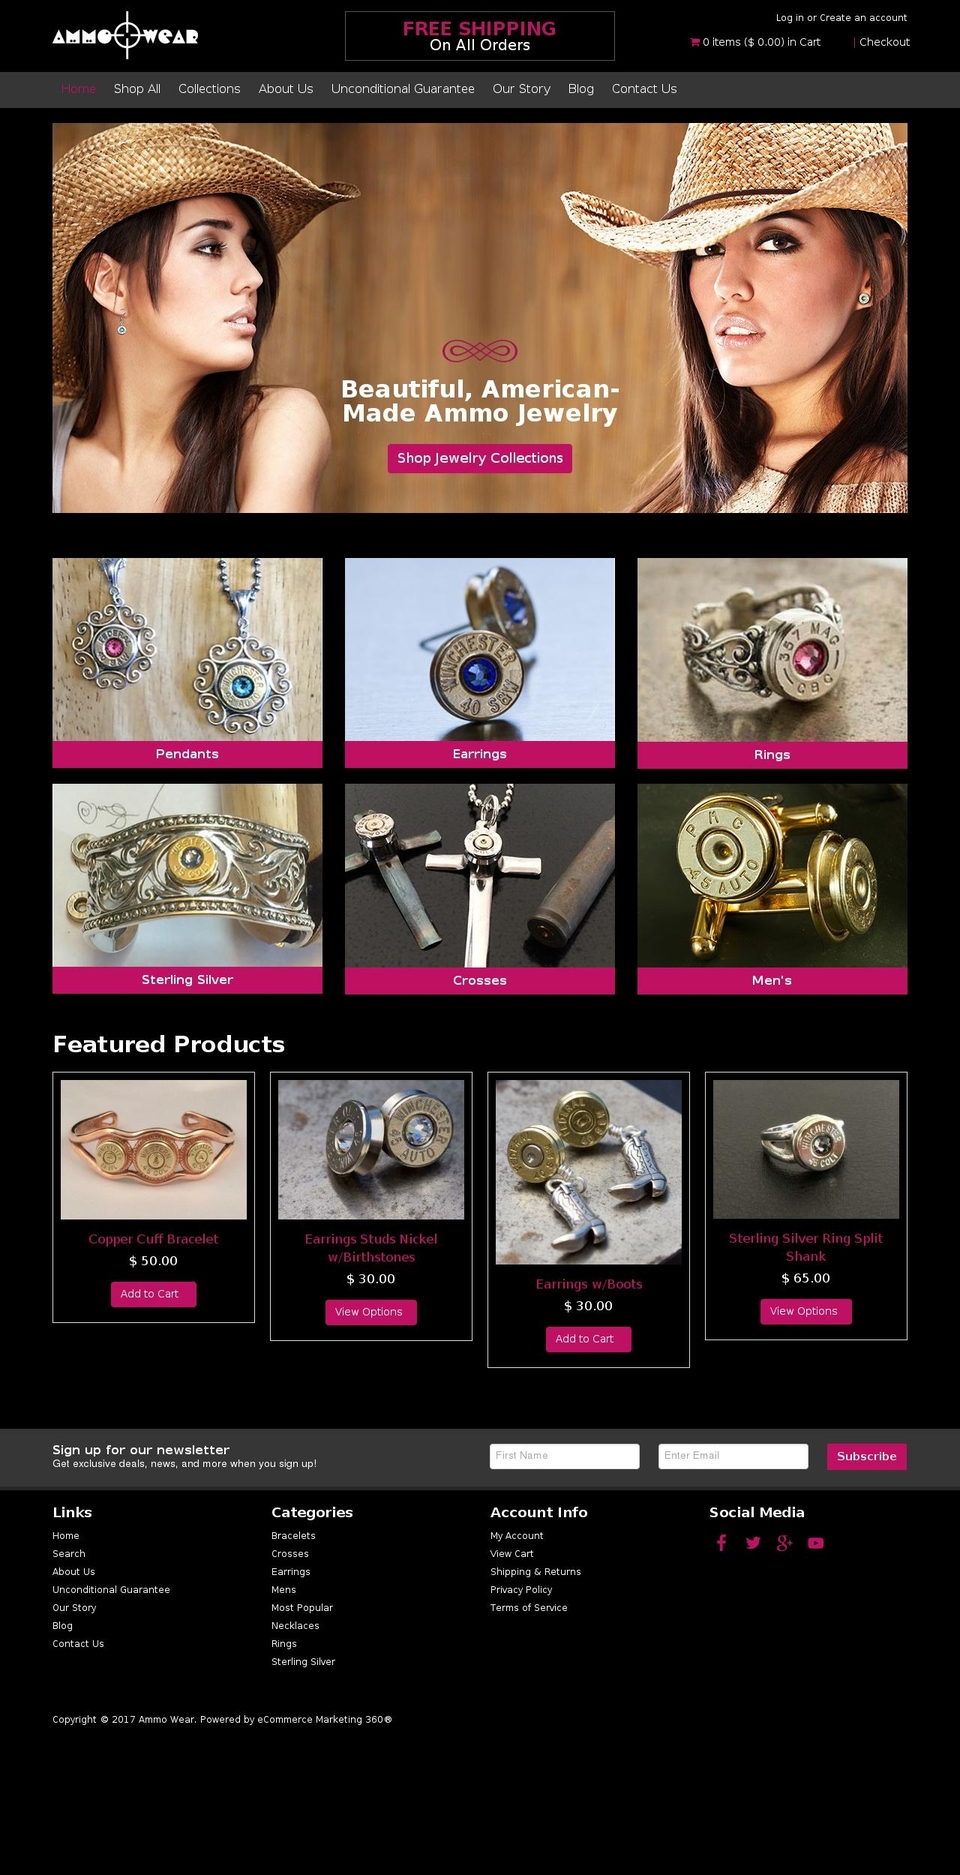 ammowear.com shopify website screenshot